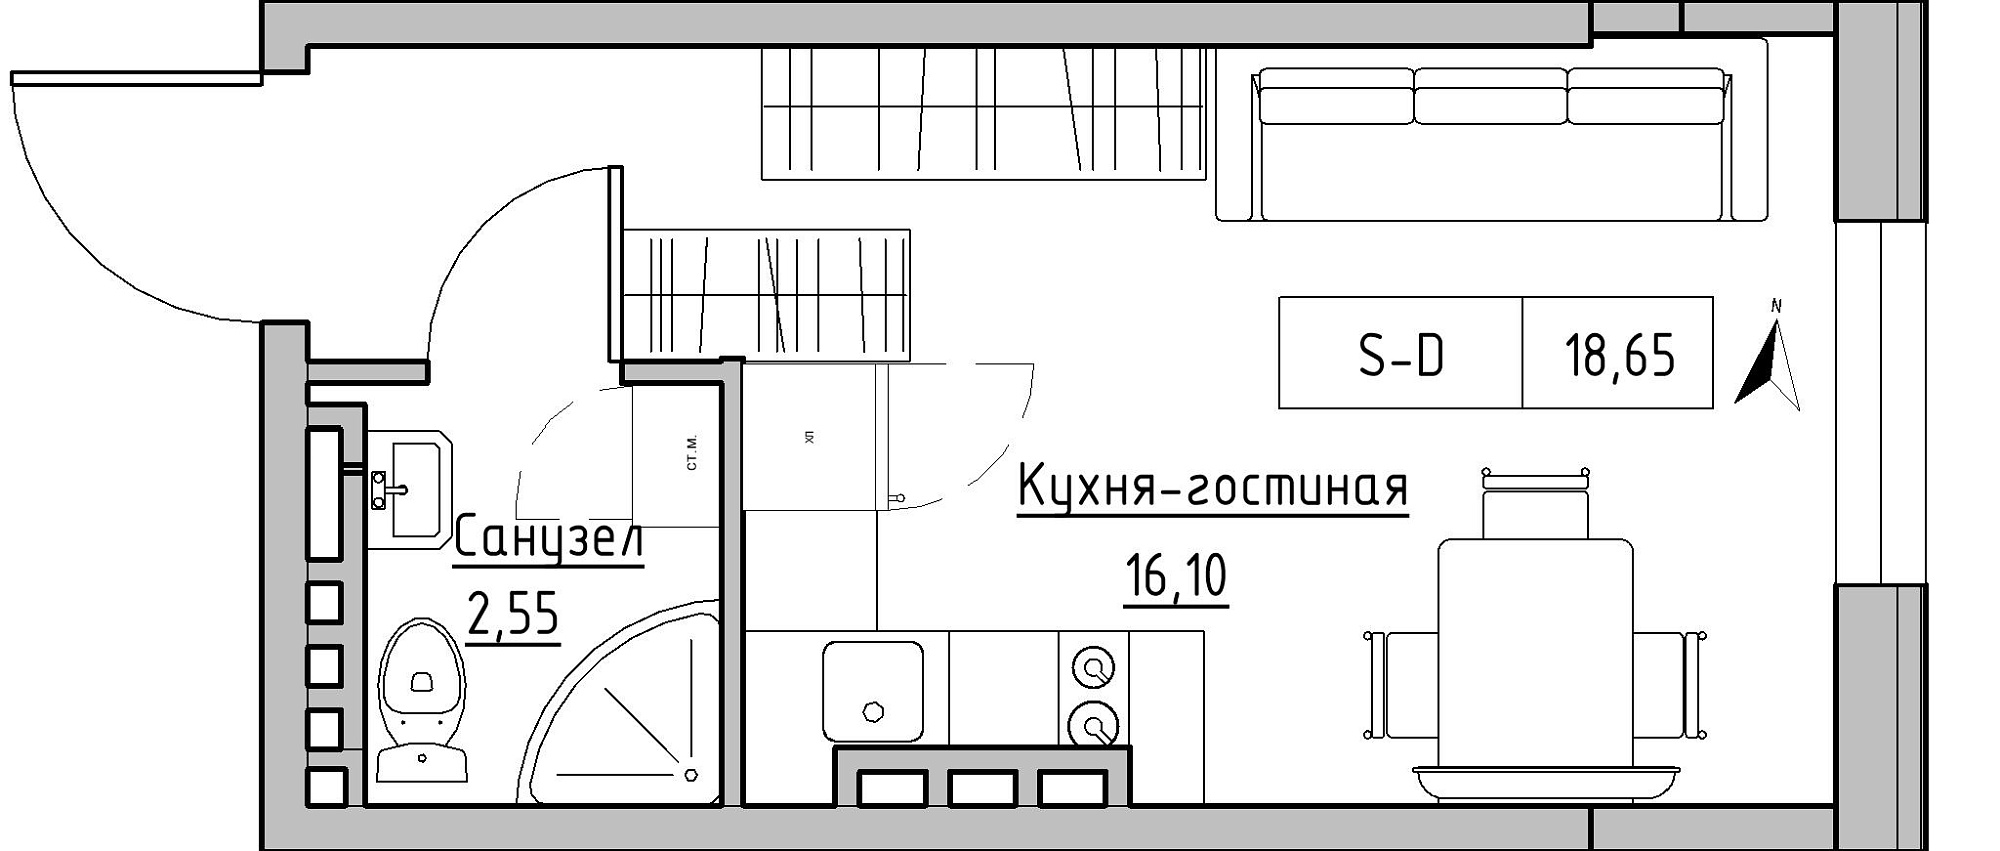 Planning Smart flats area 18.65m2, KS-024-05/0017.